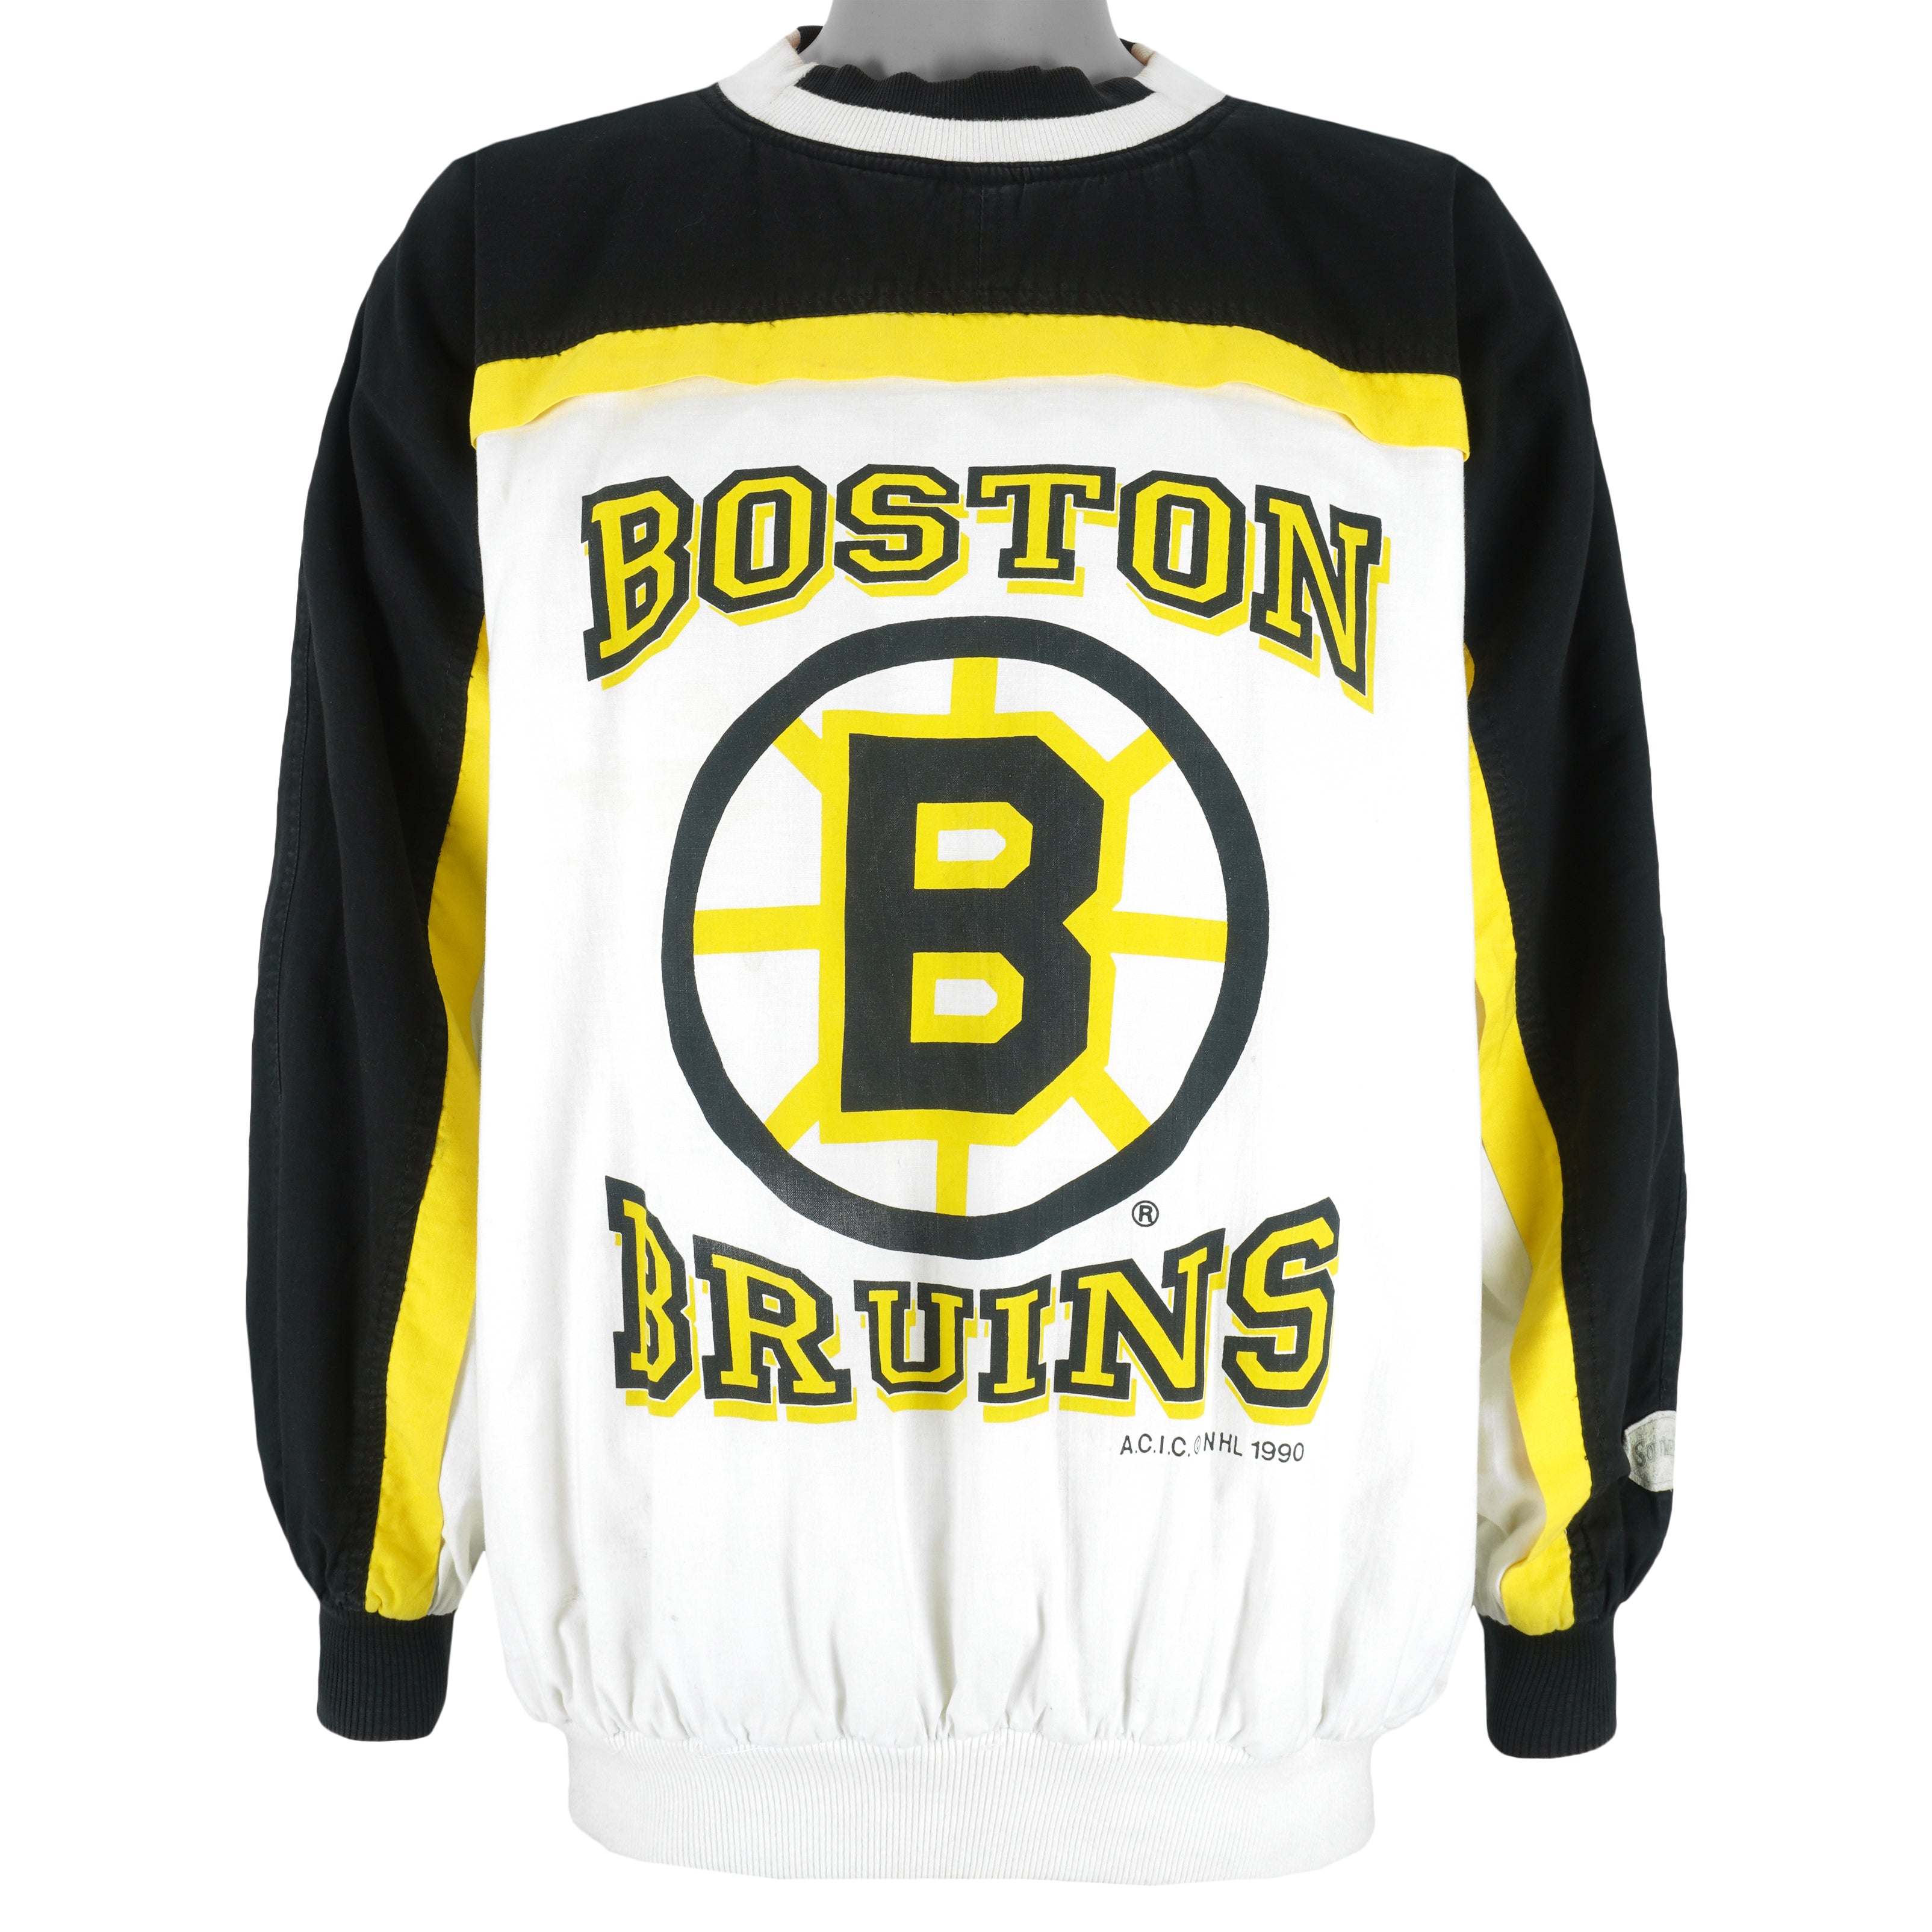 Fanatics NHL Boston Bruins Vintage Black Crew Neck Sweatshirt, Men's, Large